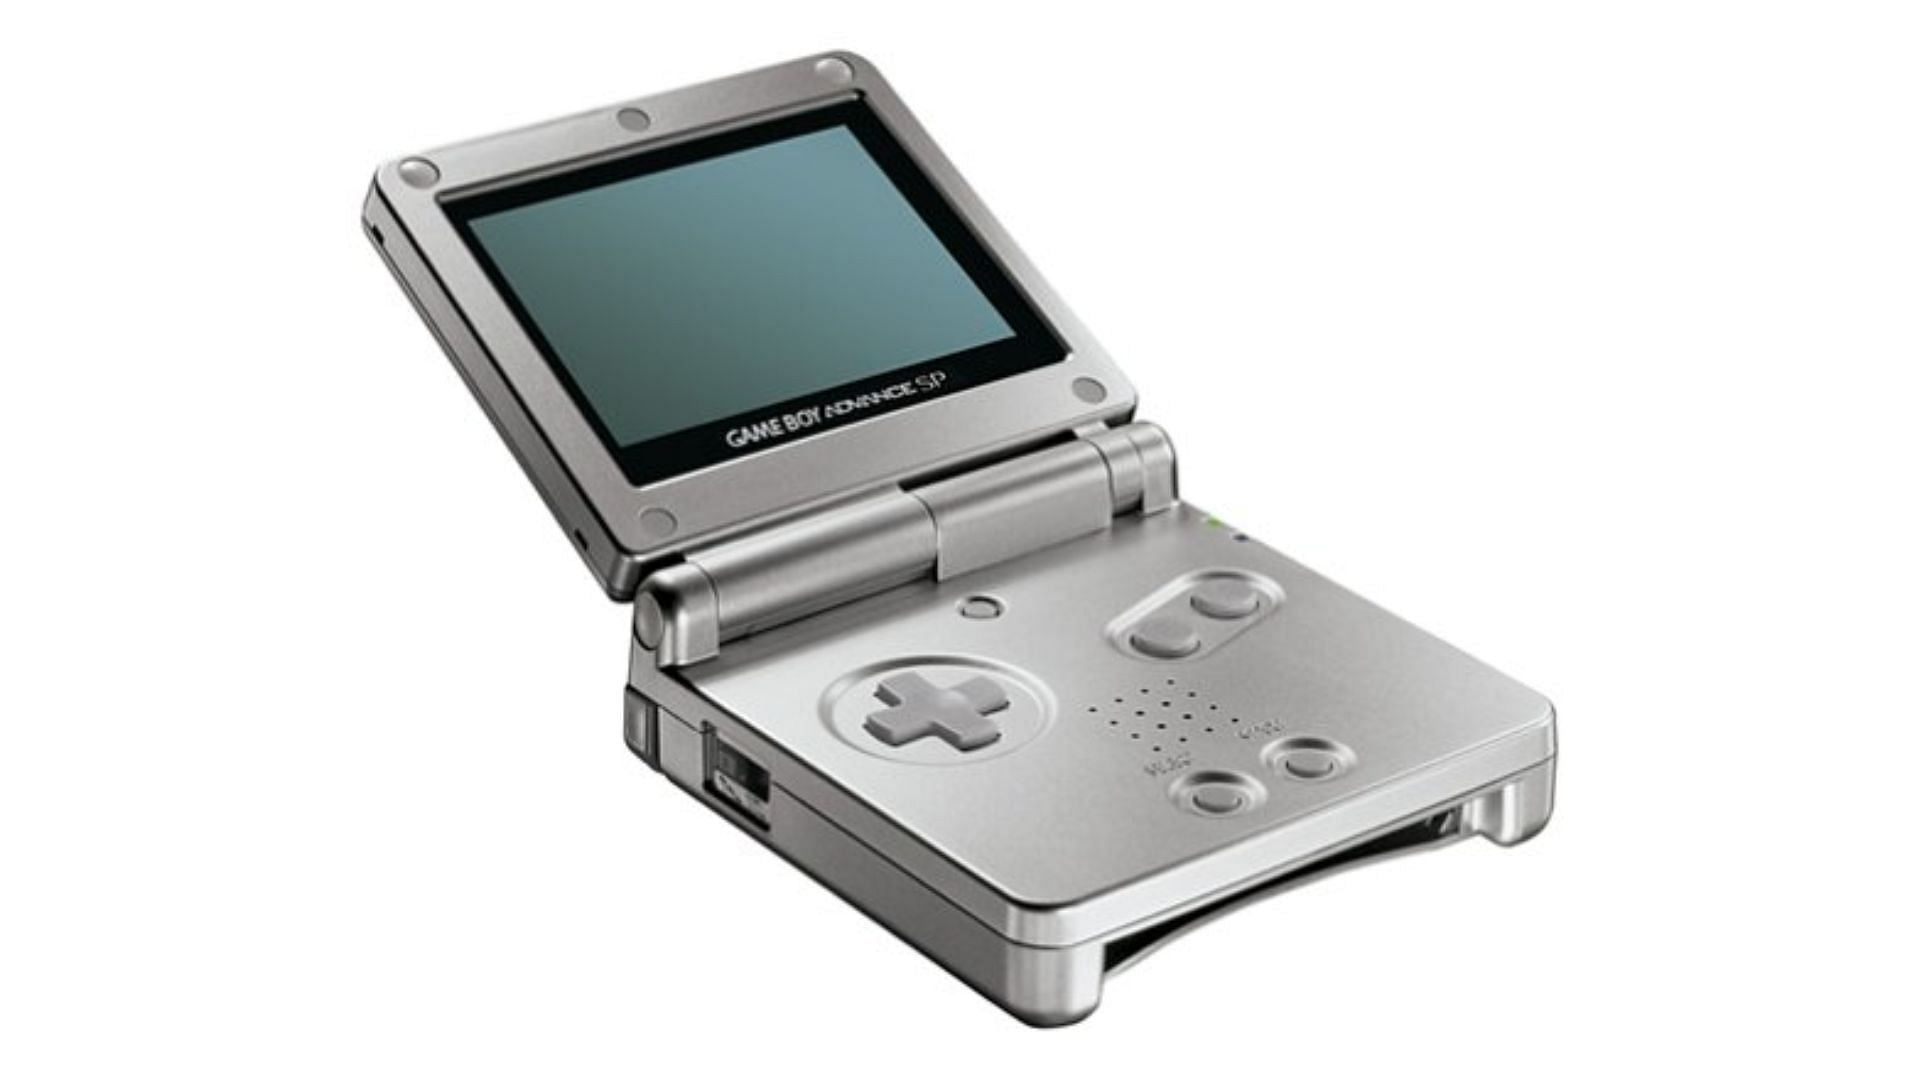 The Game boy Advance SP (Image via Amazon)